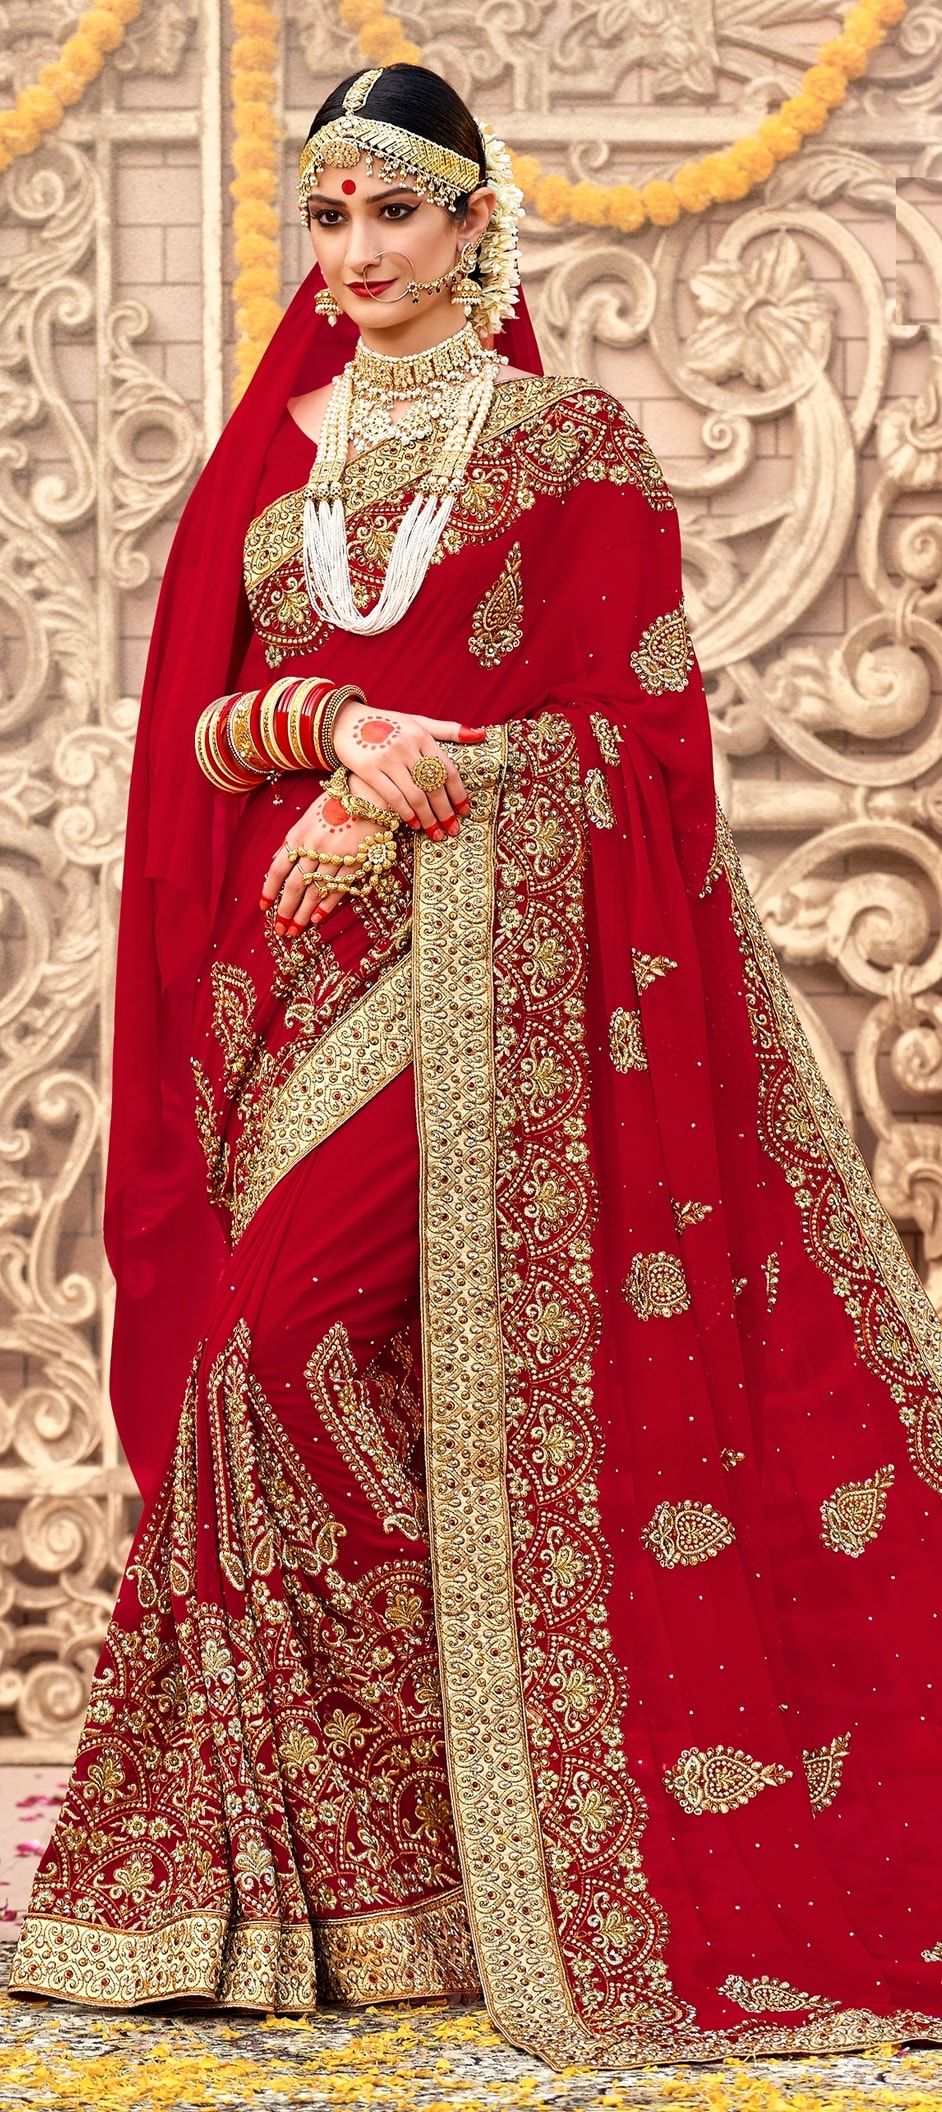 Bridal Georgette Lehenga Saree at Rs 2000/piece in Surat | ID: 19285425348